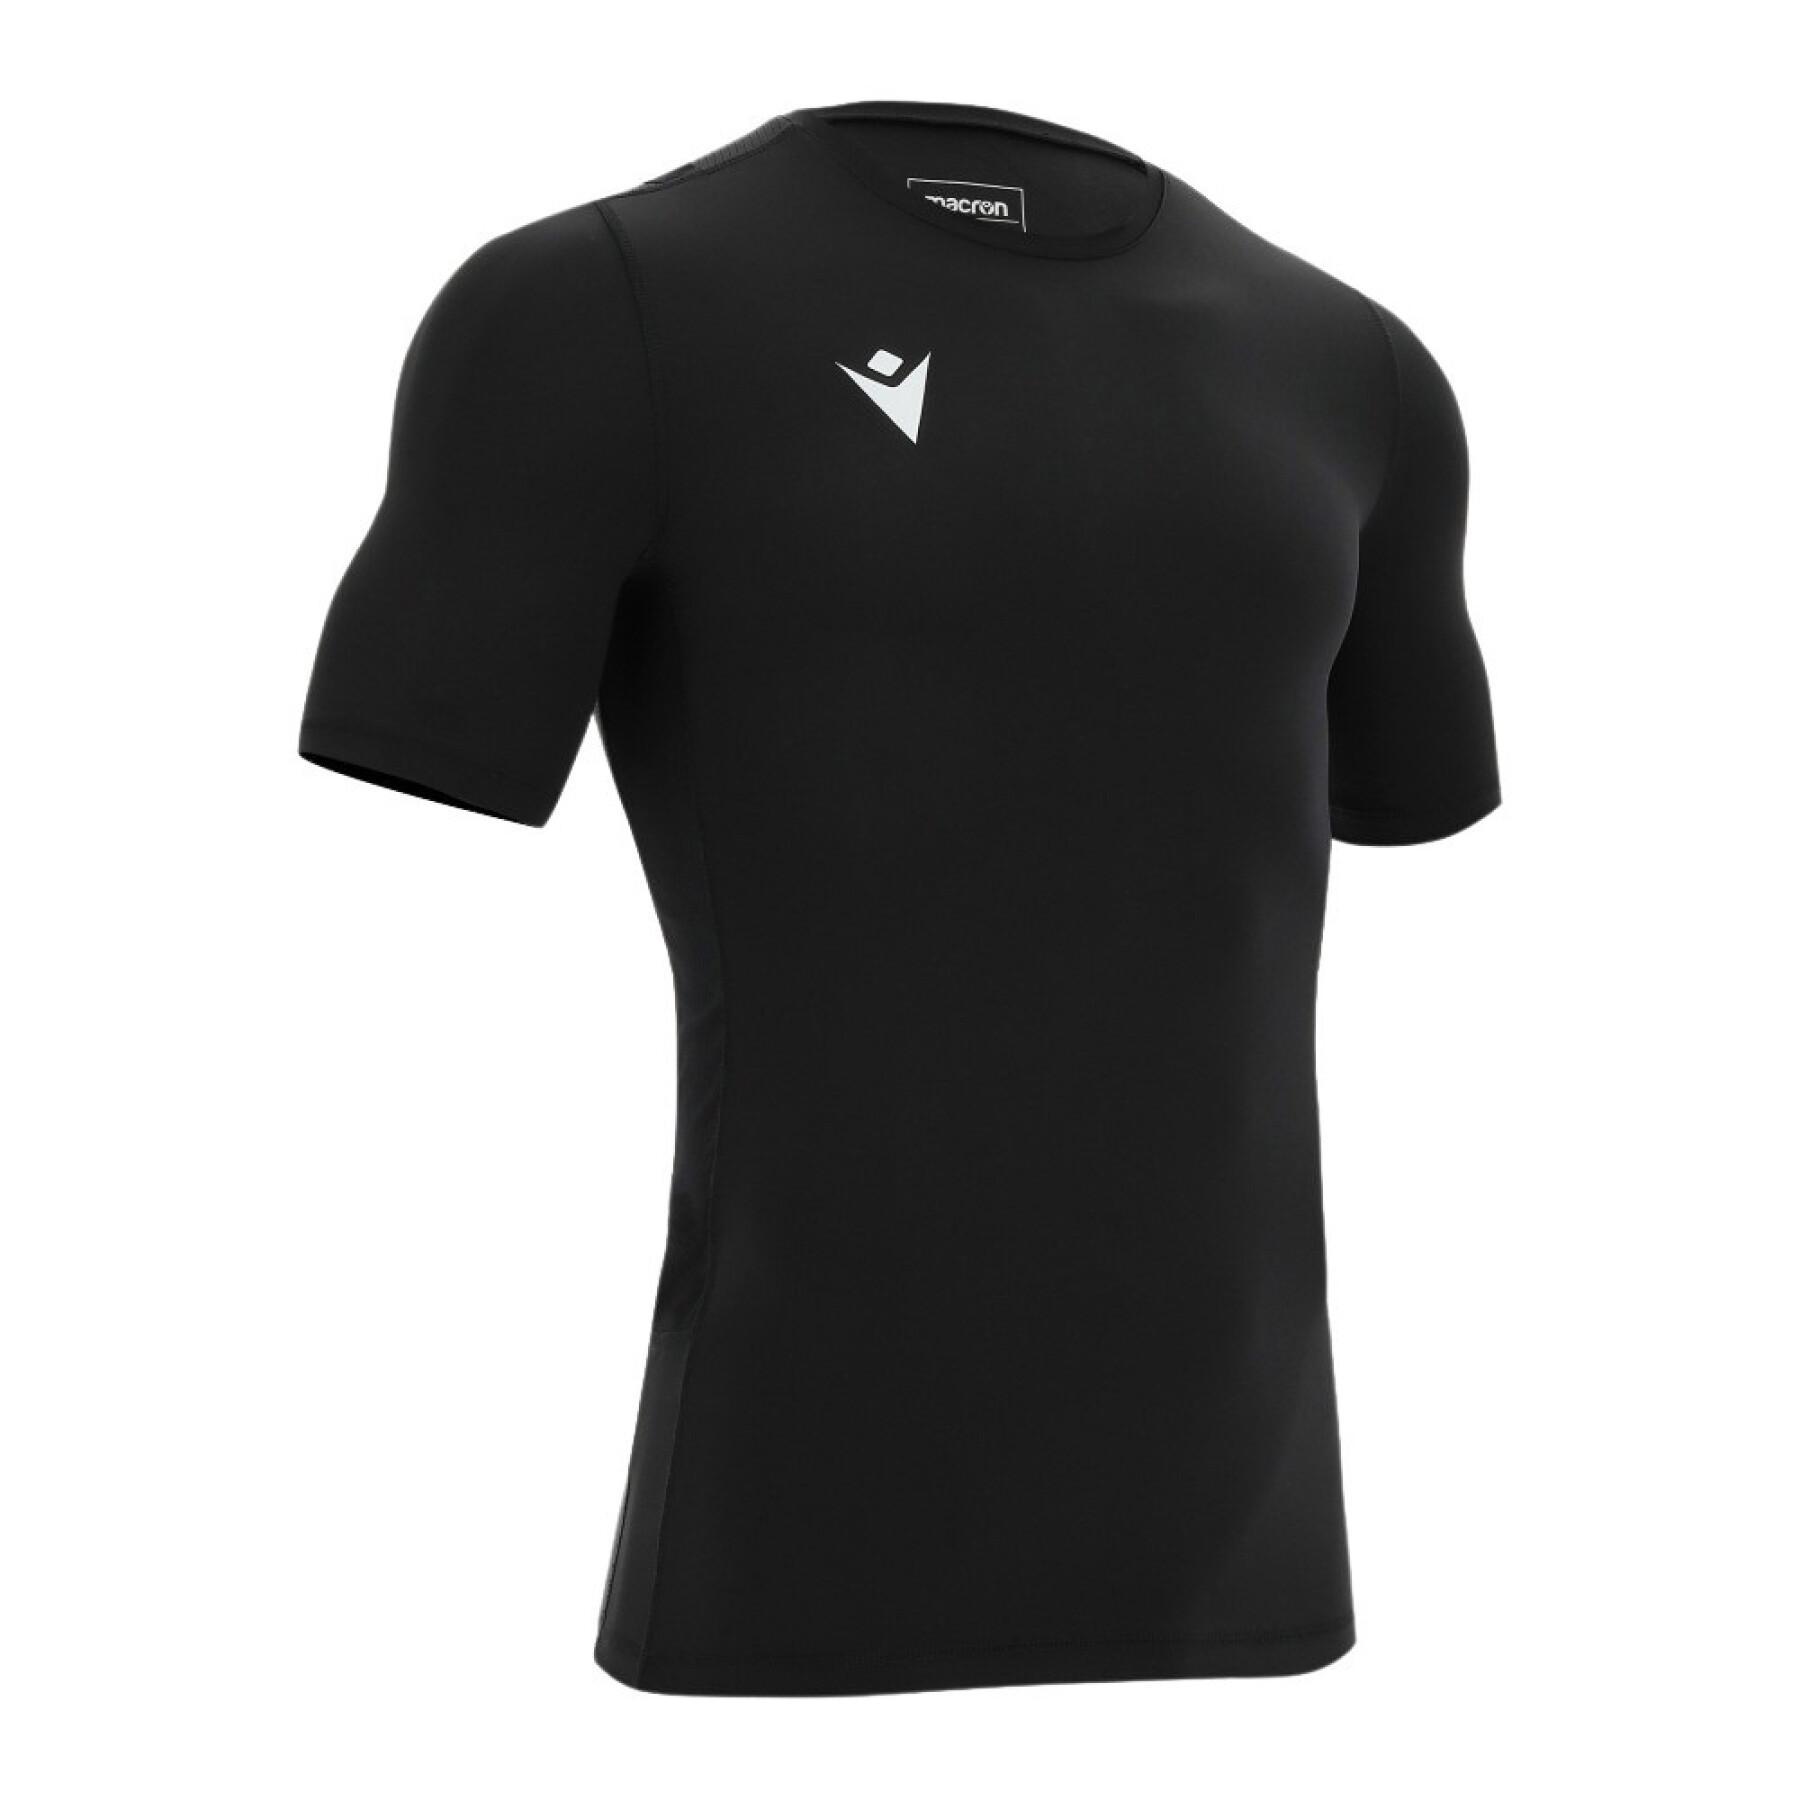 Referee undershirt Macron Ellis - Shirts - Textile - Handball wear